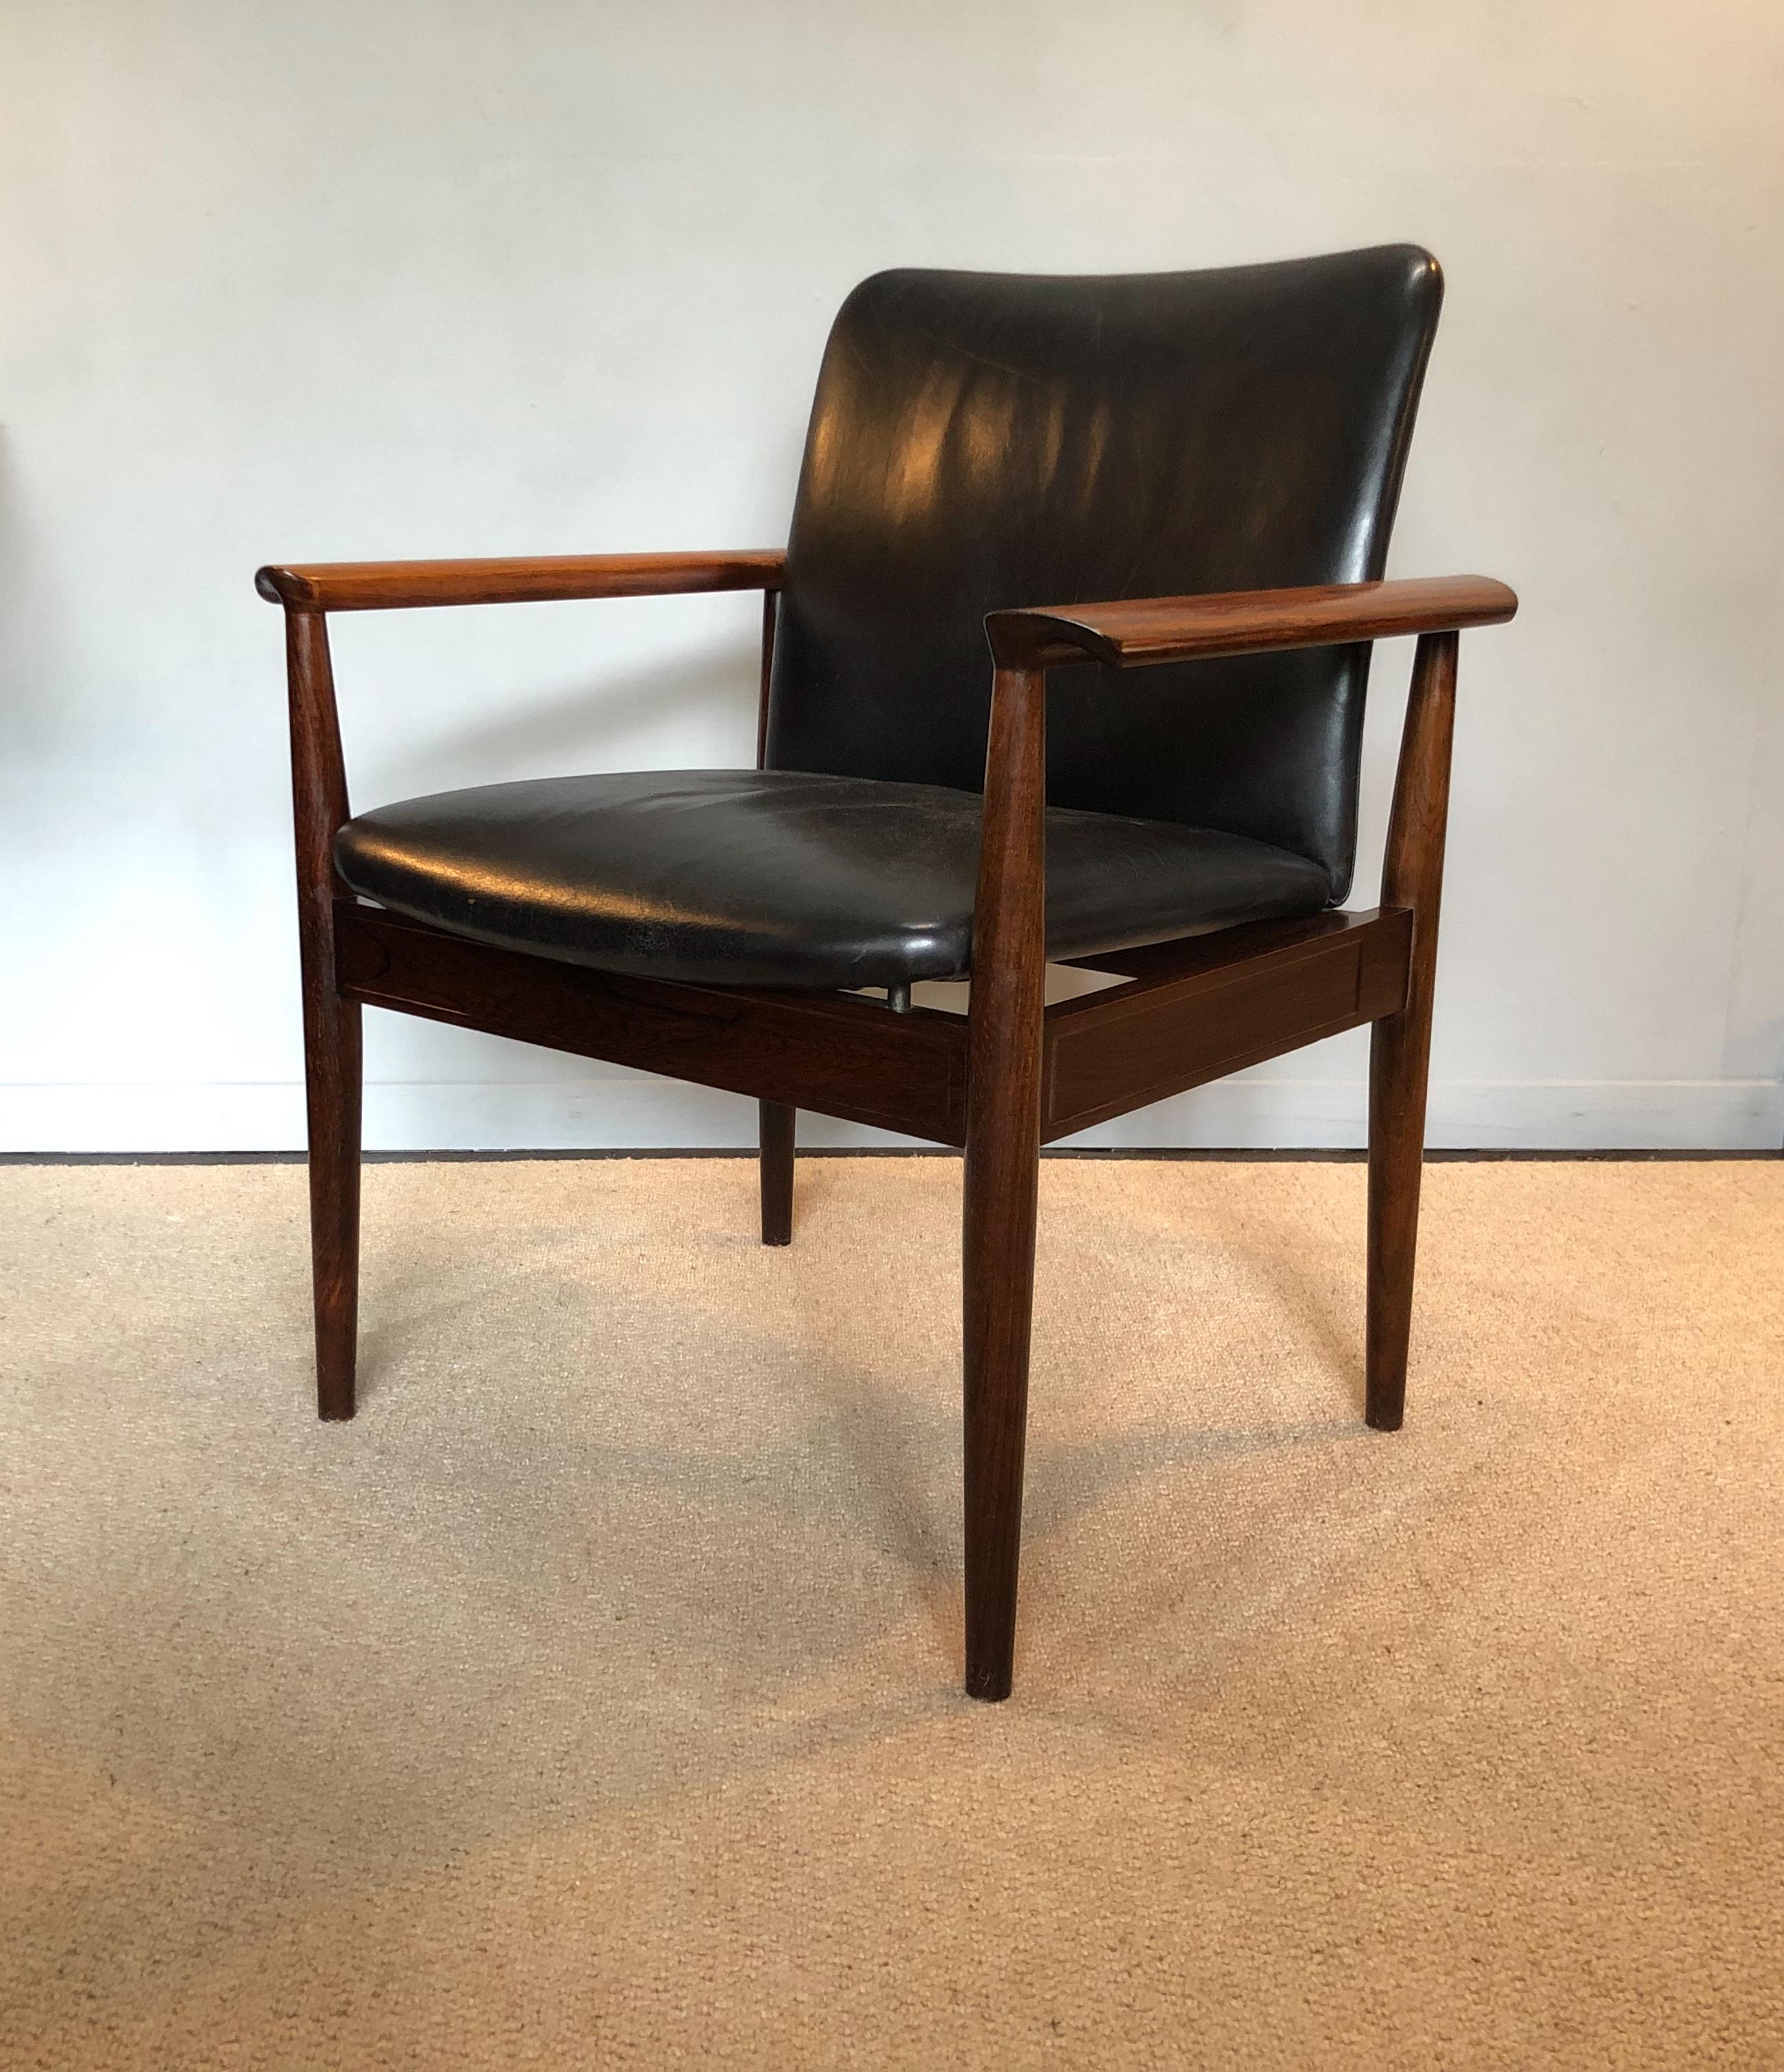 20th Century Finn Juhl armchair, Rosewood and Leather Diplomat